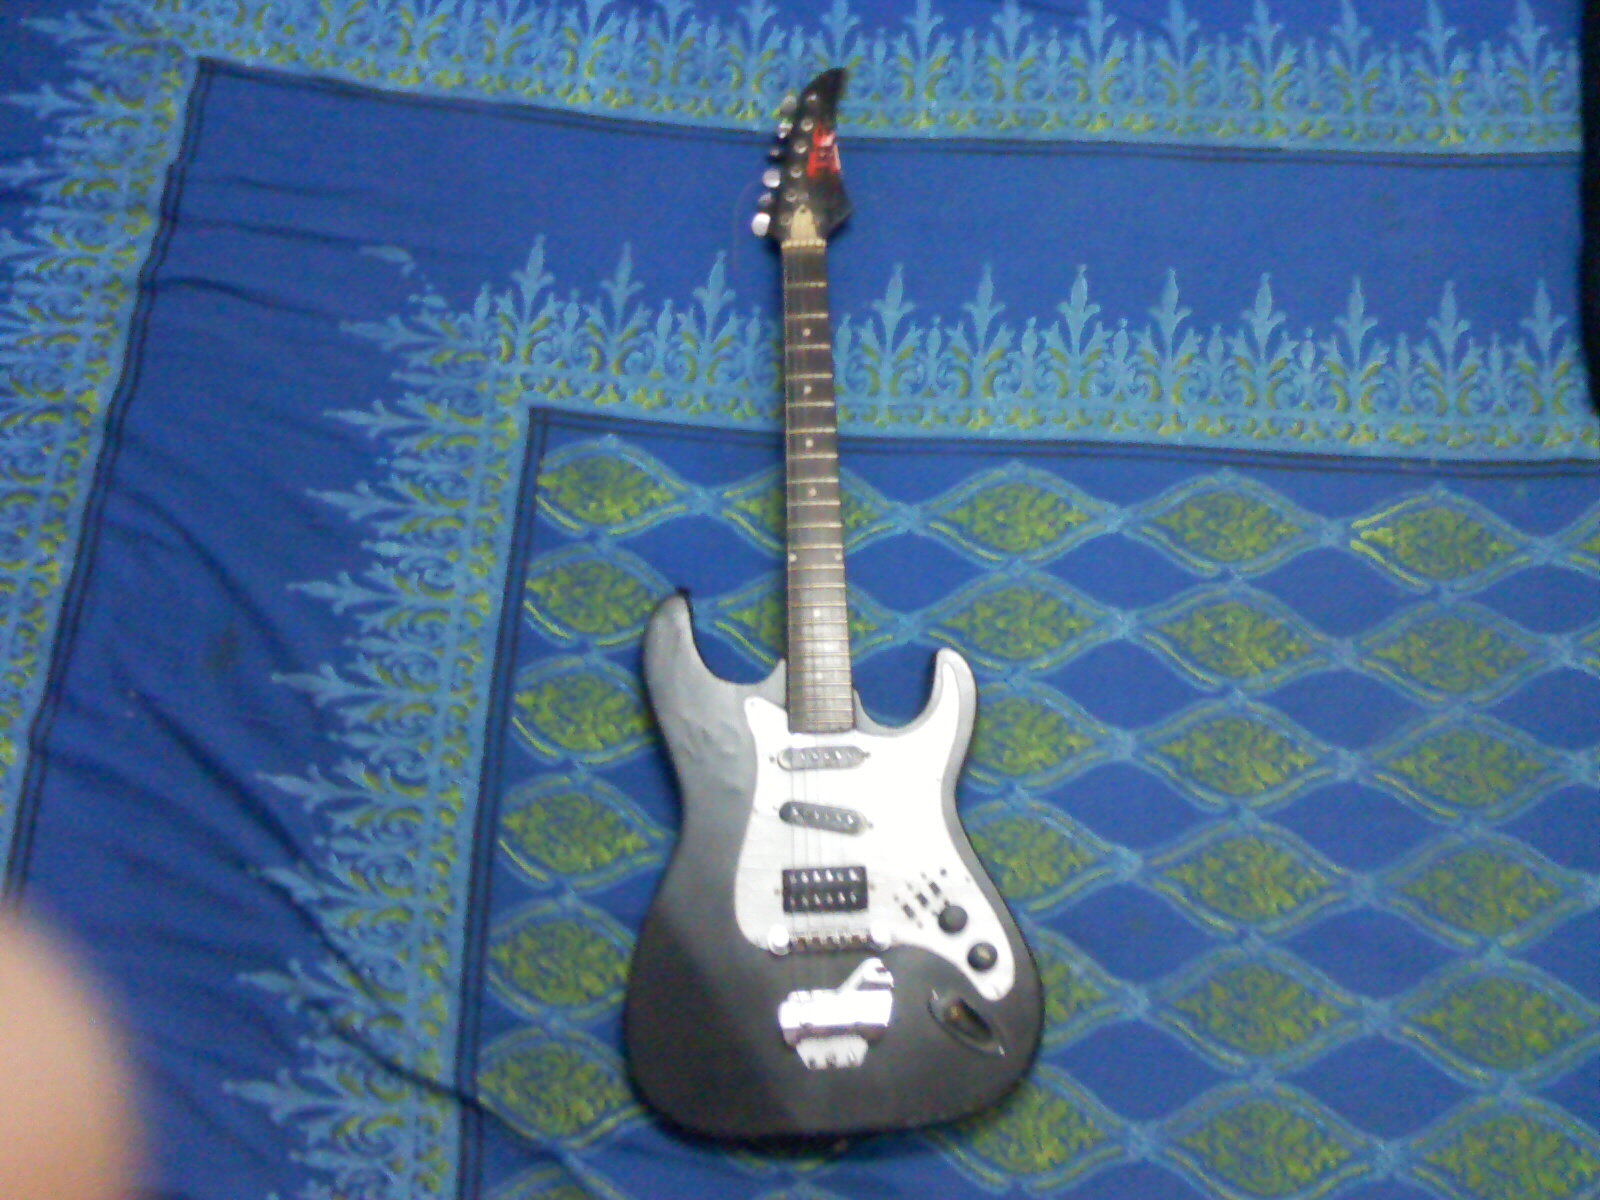 yemaha guitar for sale. .... 01670268576 large image 0